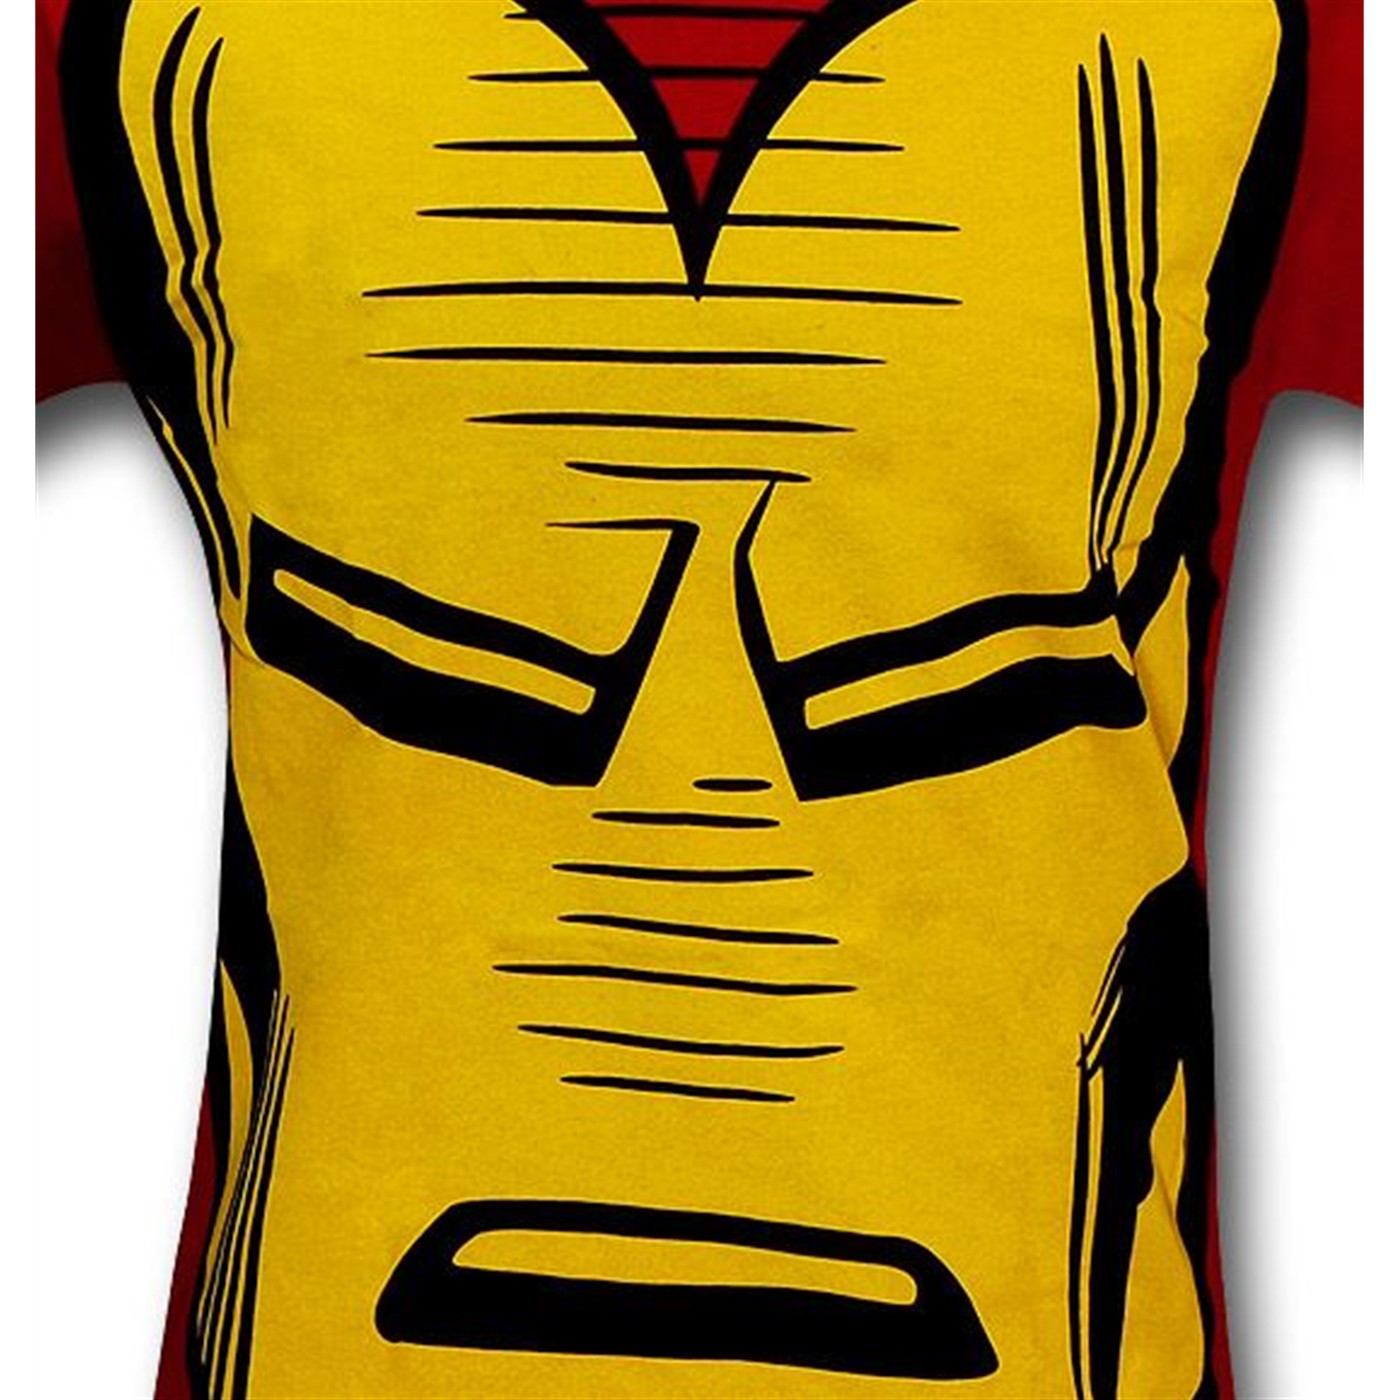 Iron Man Giant Face 30 Single T-Shirt